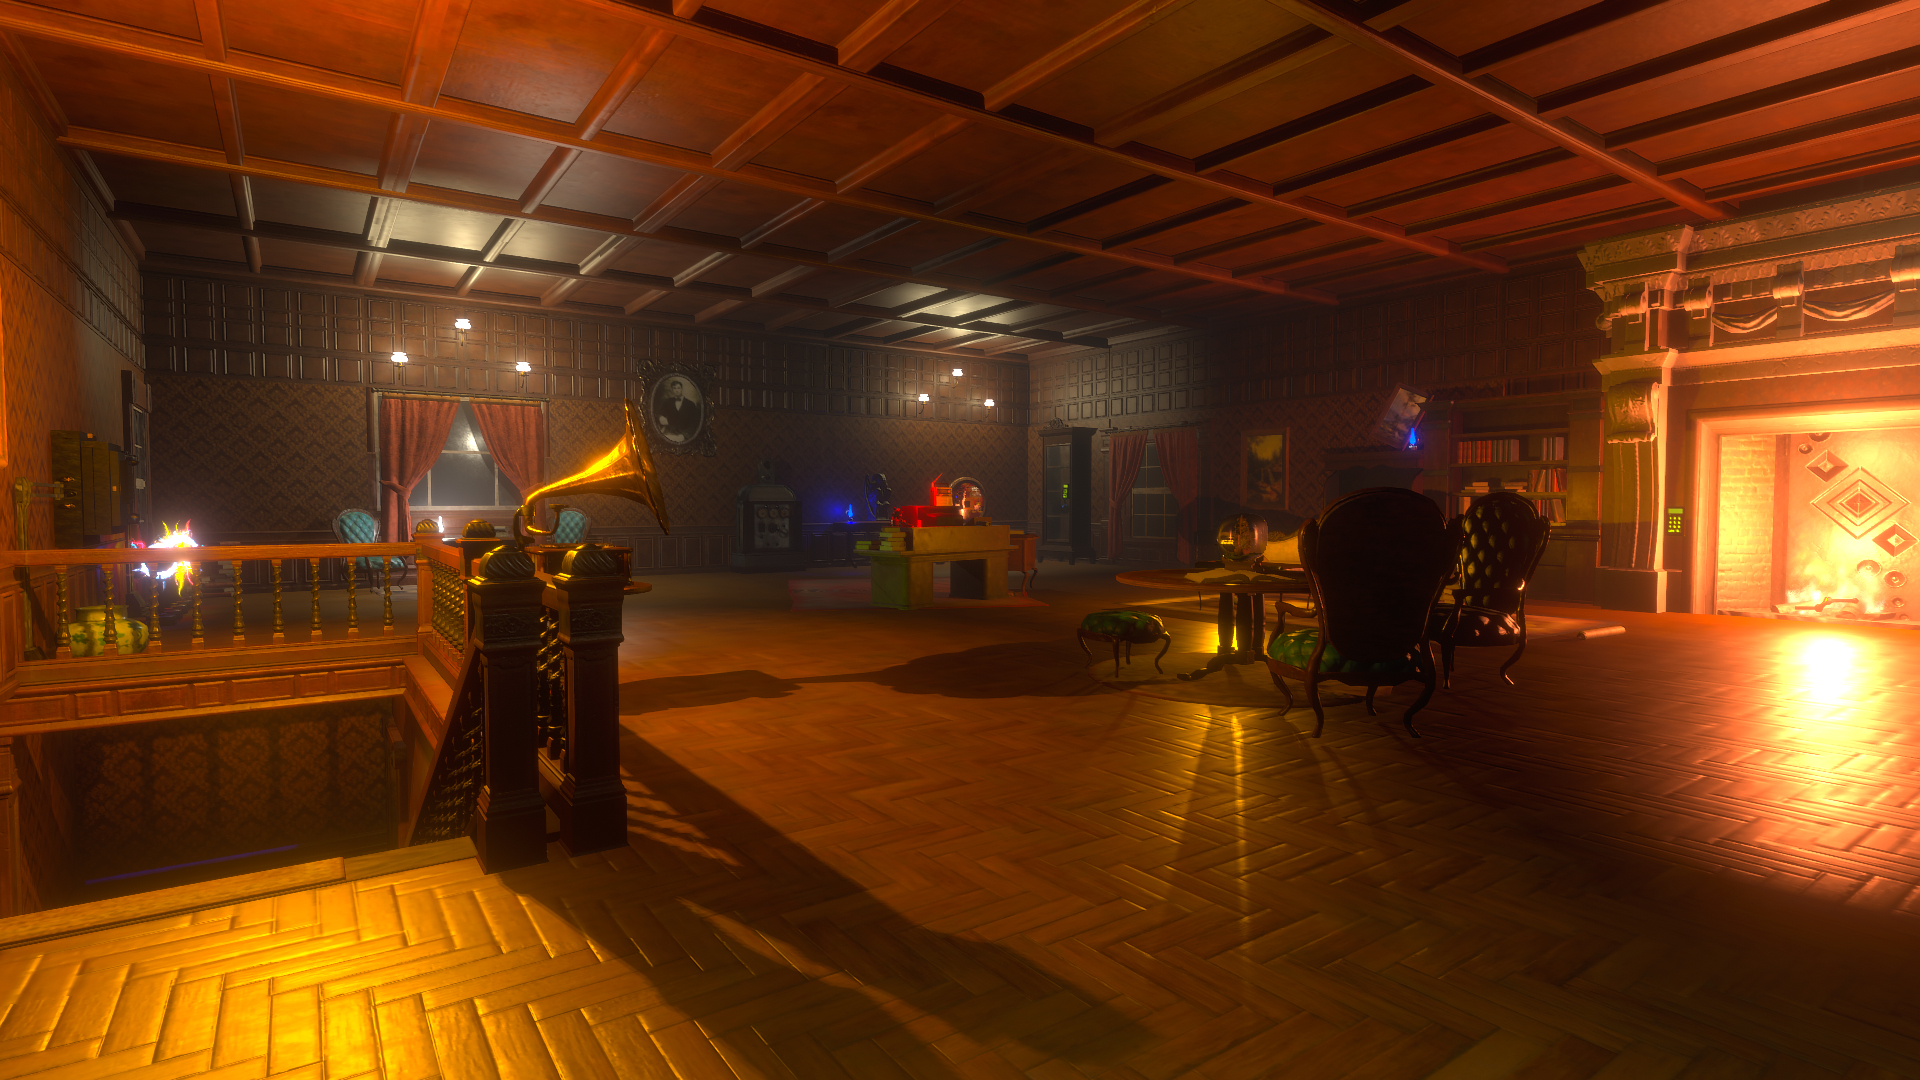 Mad Experiments 2: Escape Room no Steam